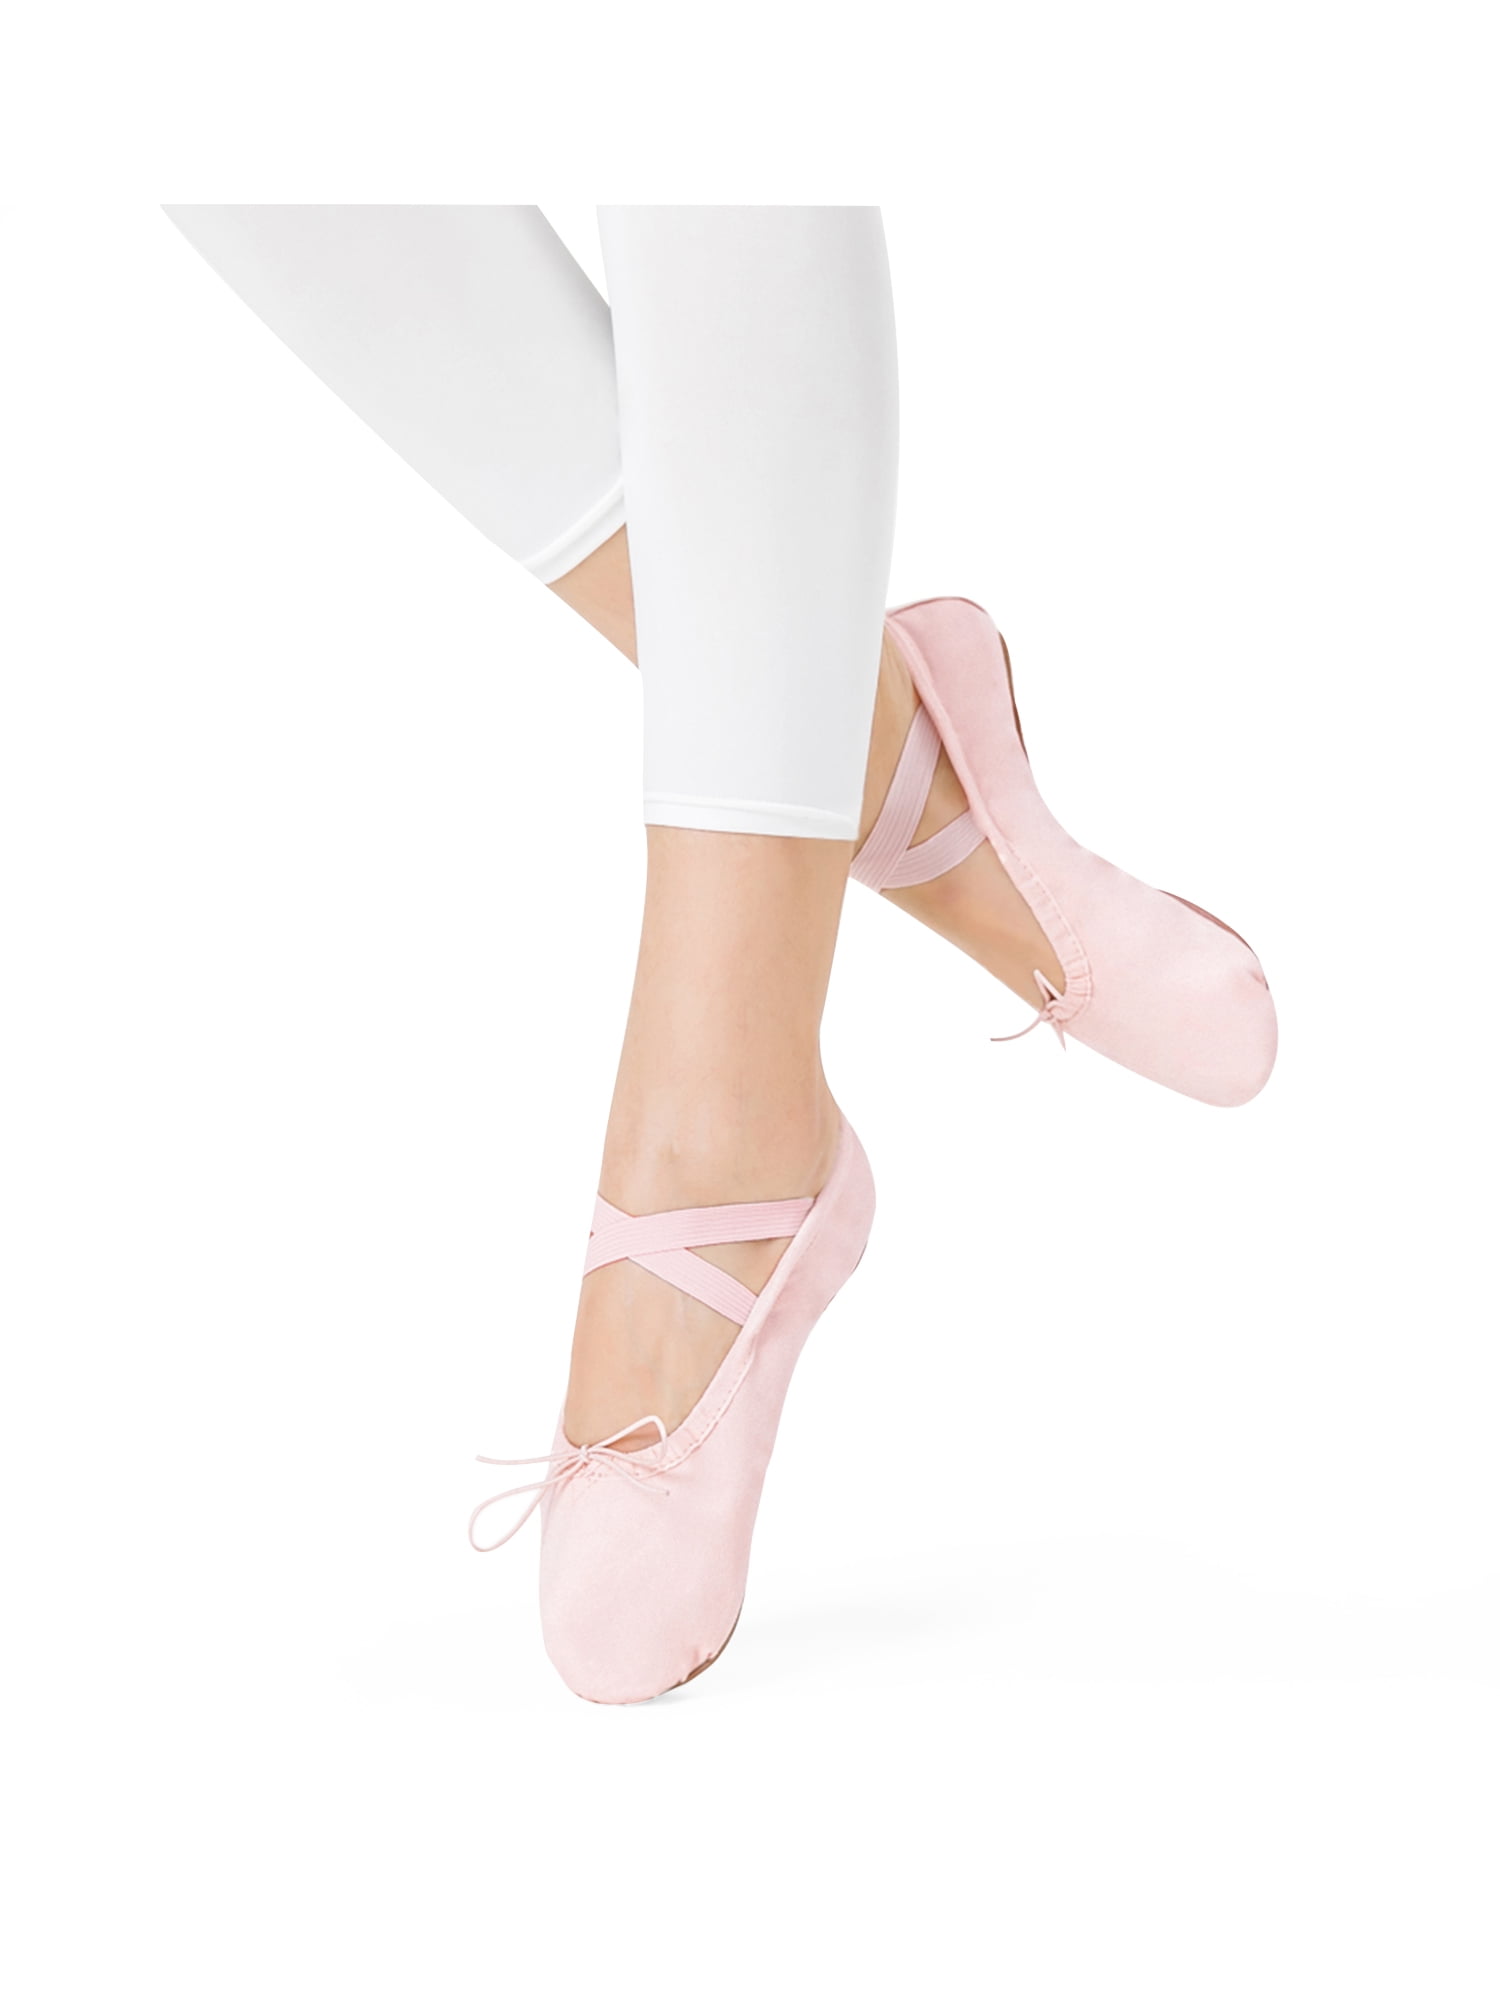 Nexete Ballet Shoes Slippers Classic Canvas Split-Sole Dance Slippers for Toddler Kid Girl Boy Women